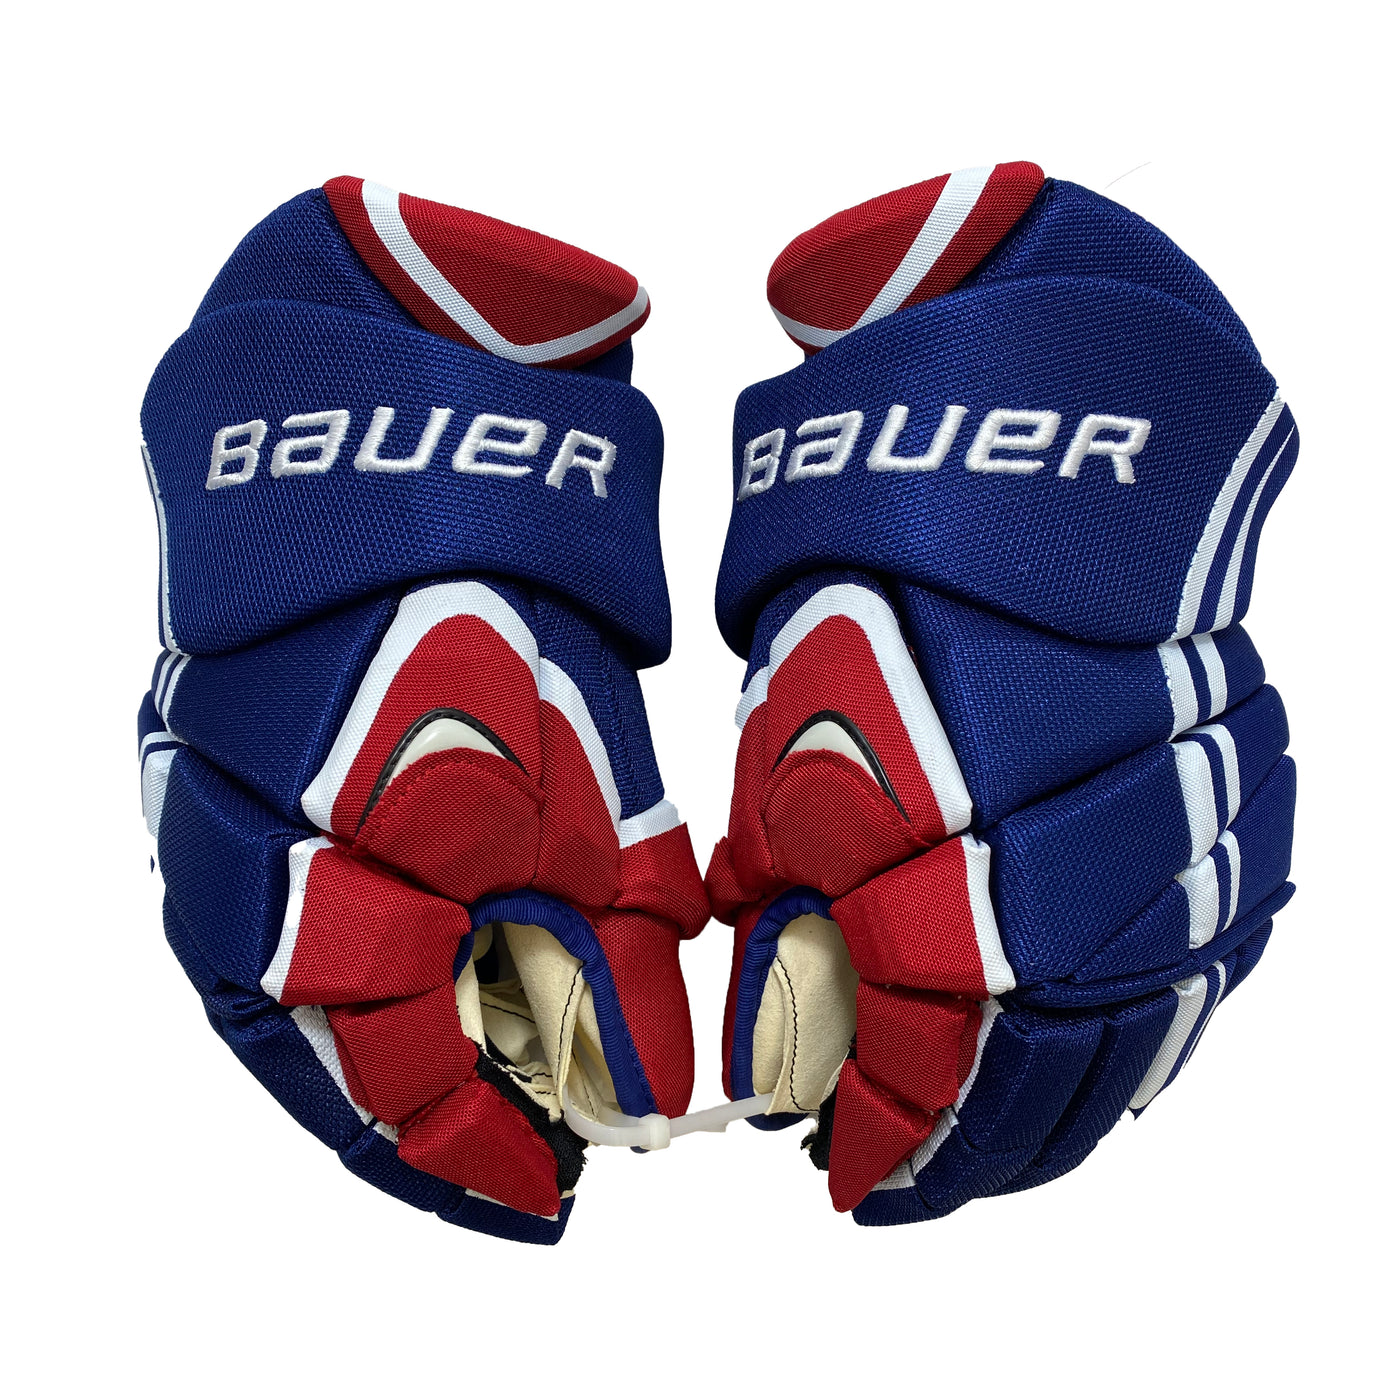 Bauer Vapor APX2 Pro - IIHF Worlds Team Czech - Pro Stock Gloves - Jakub Kindl